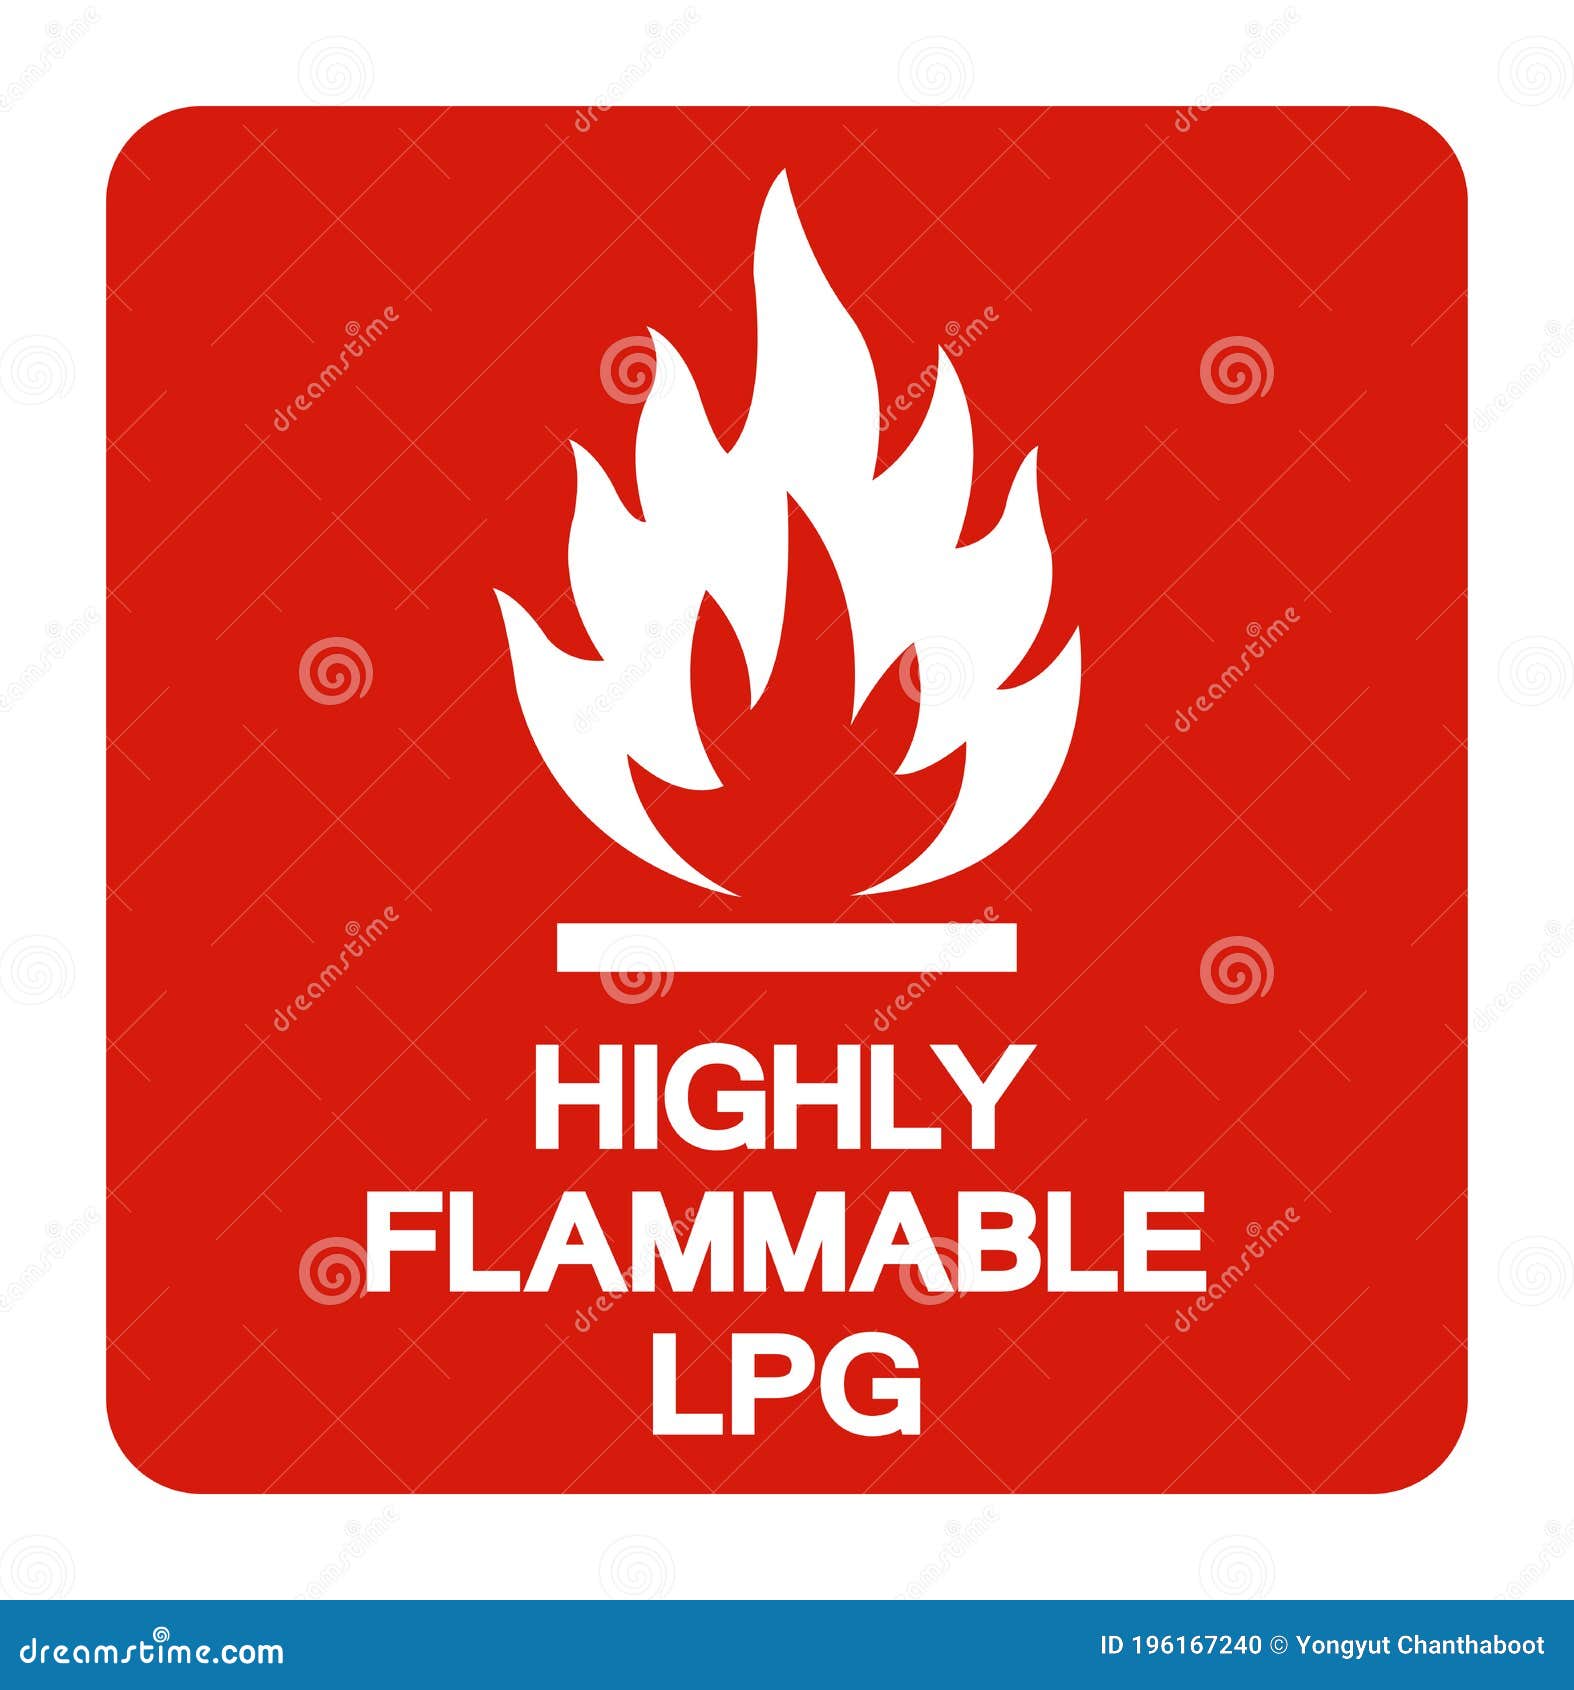 Danger Highly Flammable LPG Warning Adhesive Vinyl Gloss Sticker 125mm x125mm